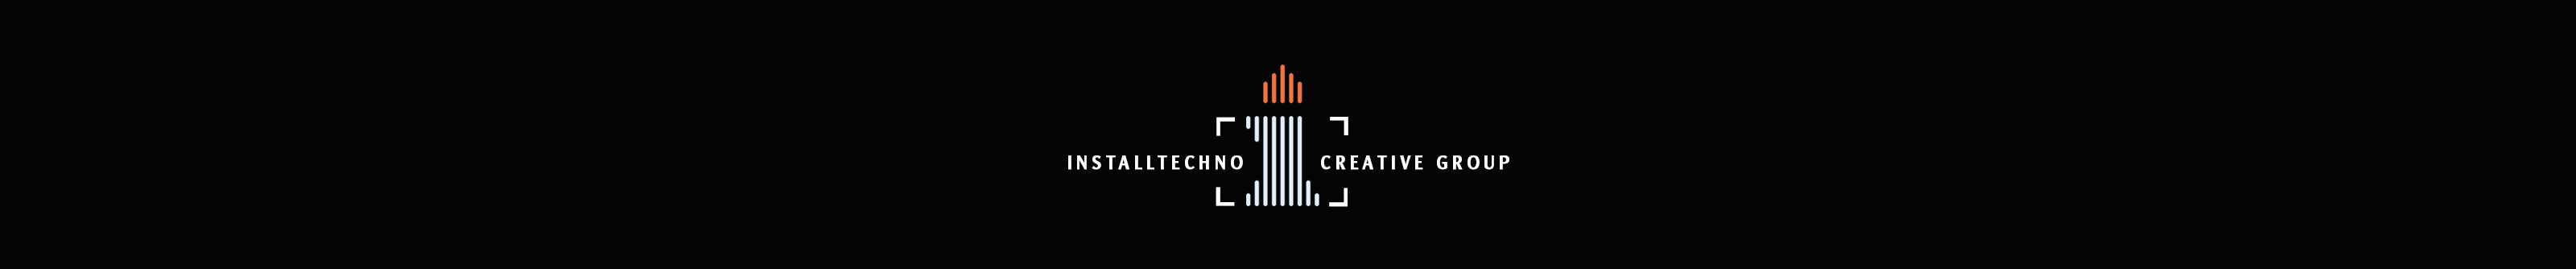 Banner profilu uživatele Installtechno Creative Group